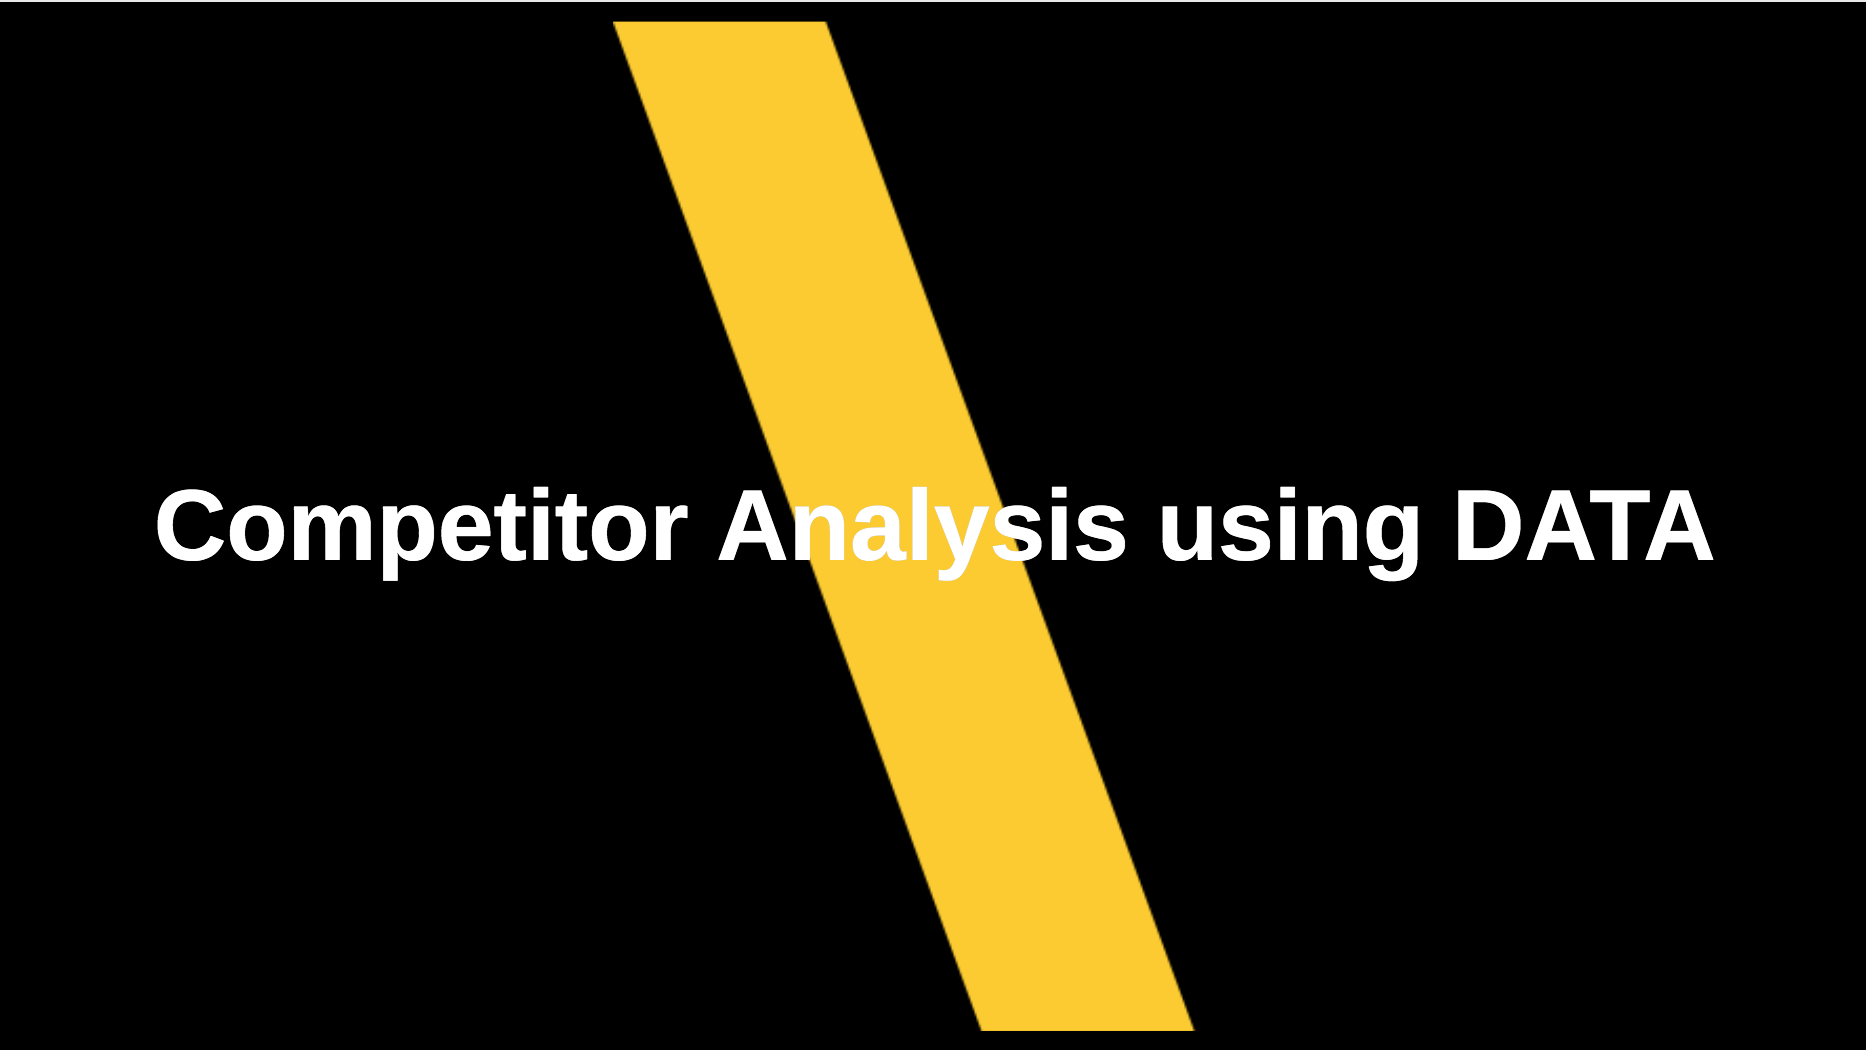 Competitor analysis using DATA